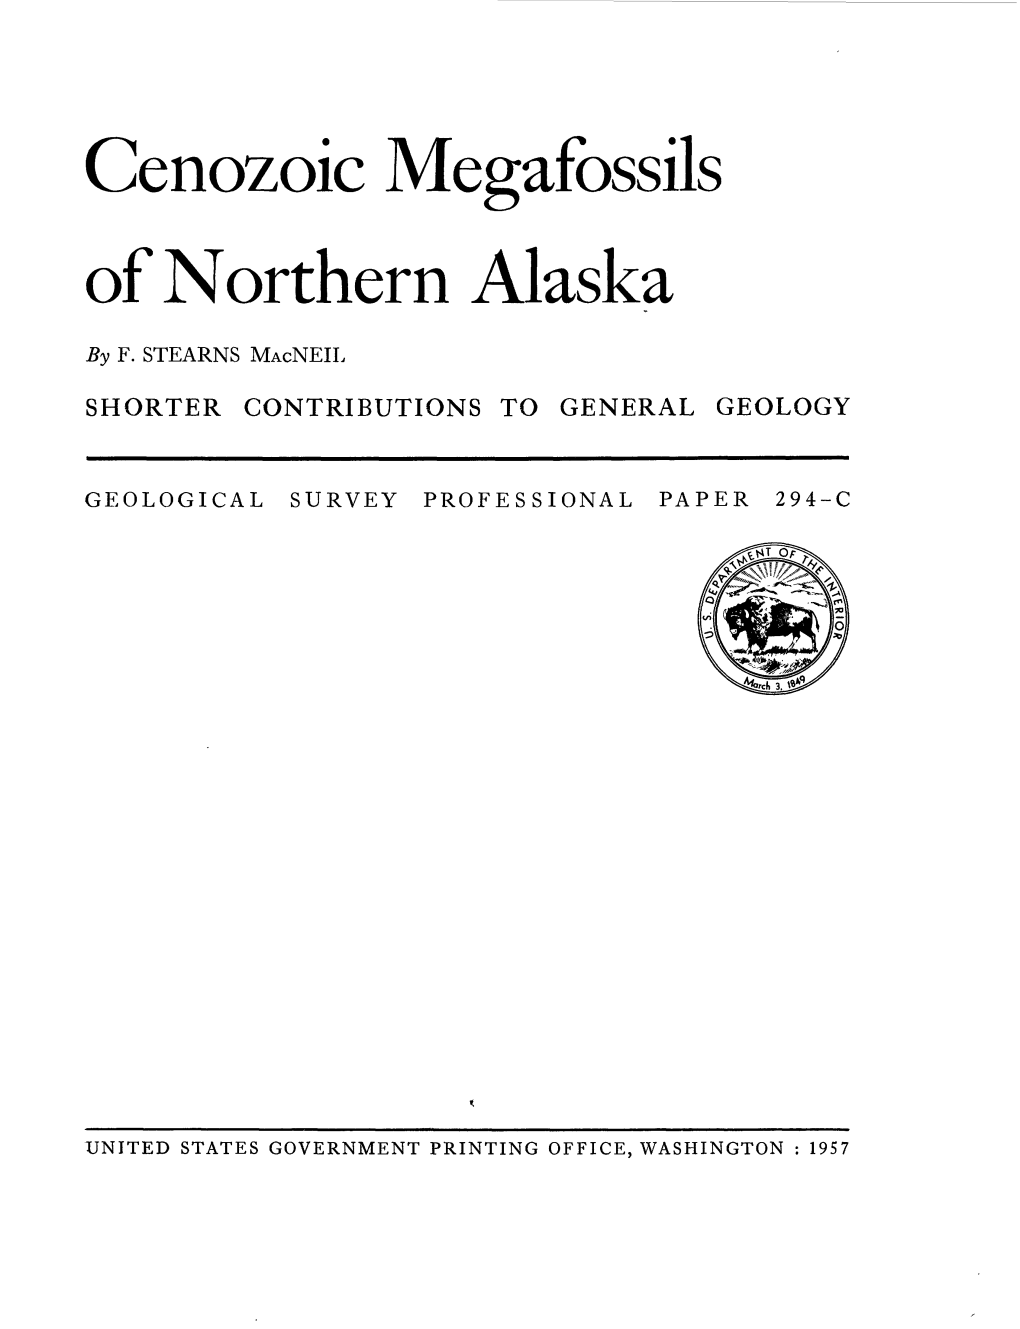 Cenozoic Megafossils of Northern Alaska